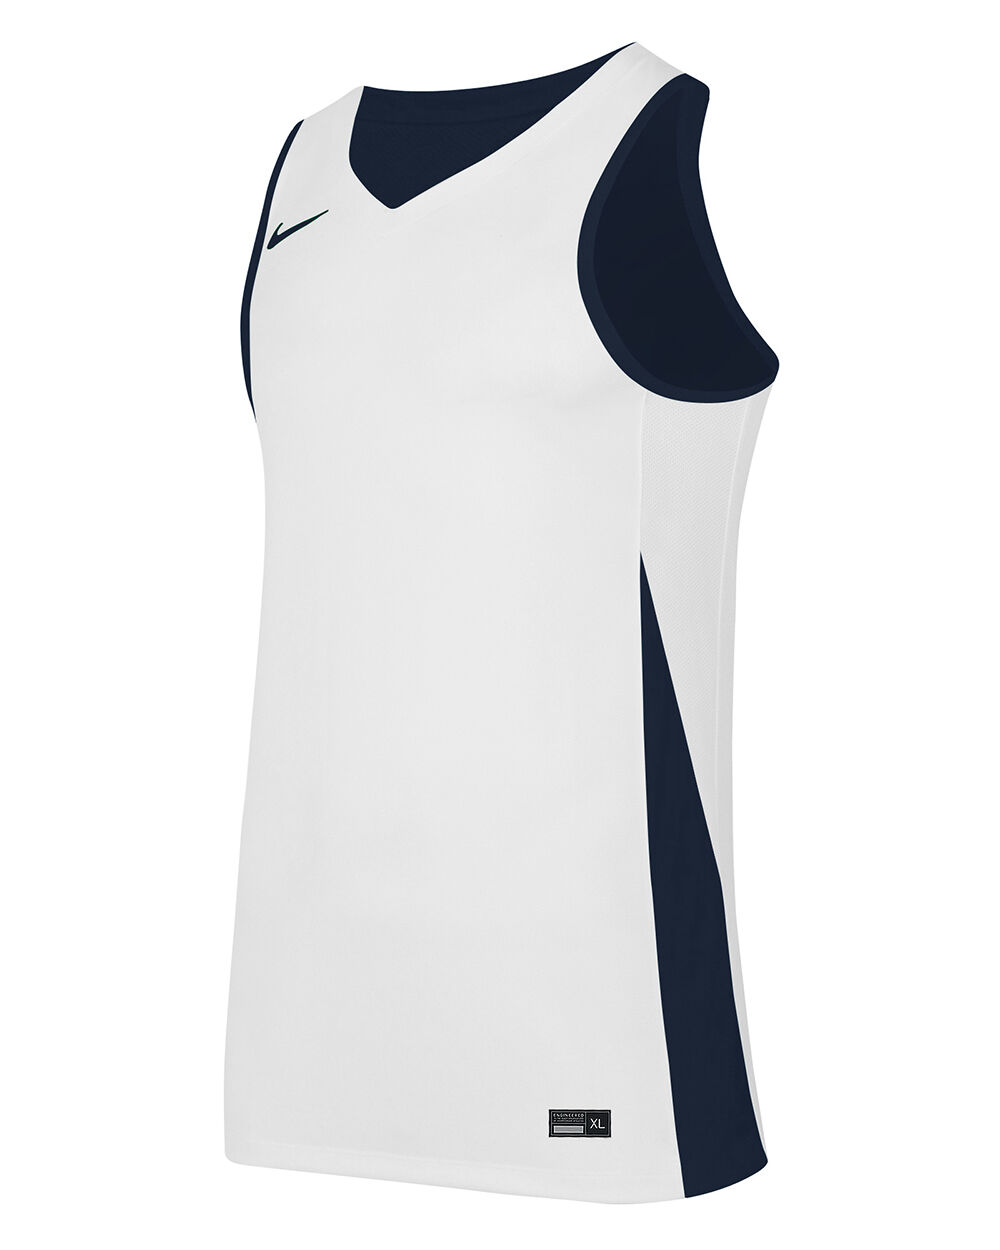 Nike Maglia da basket reversibile Team Blu Navy e Bianco Bambino NT0204-451 M